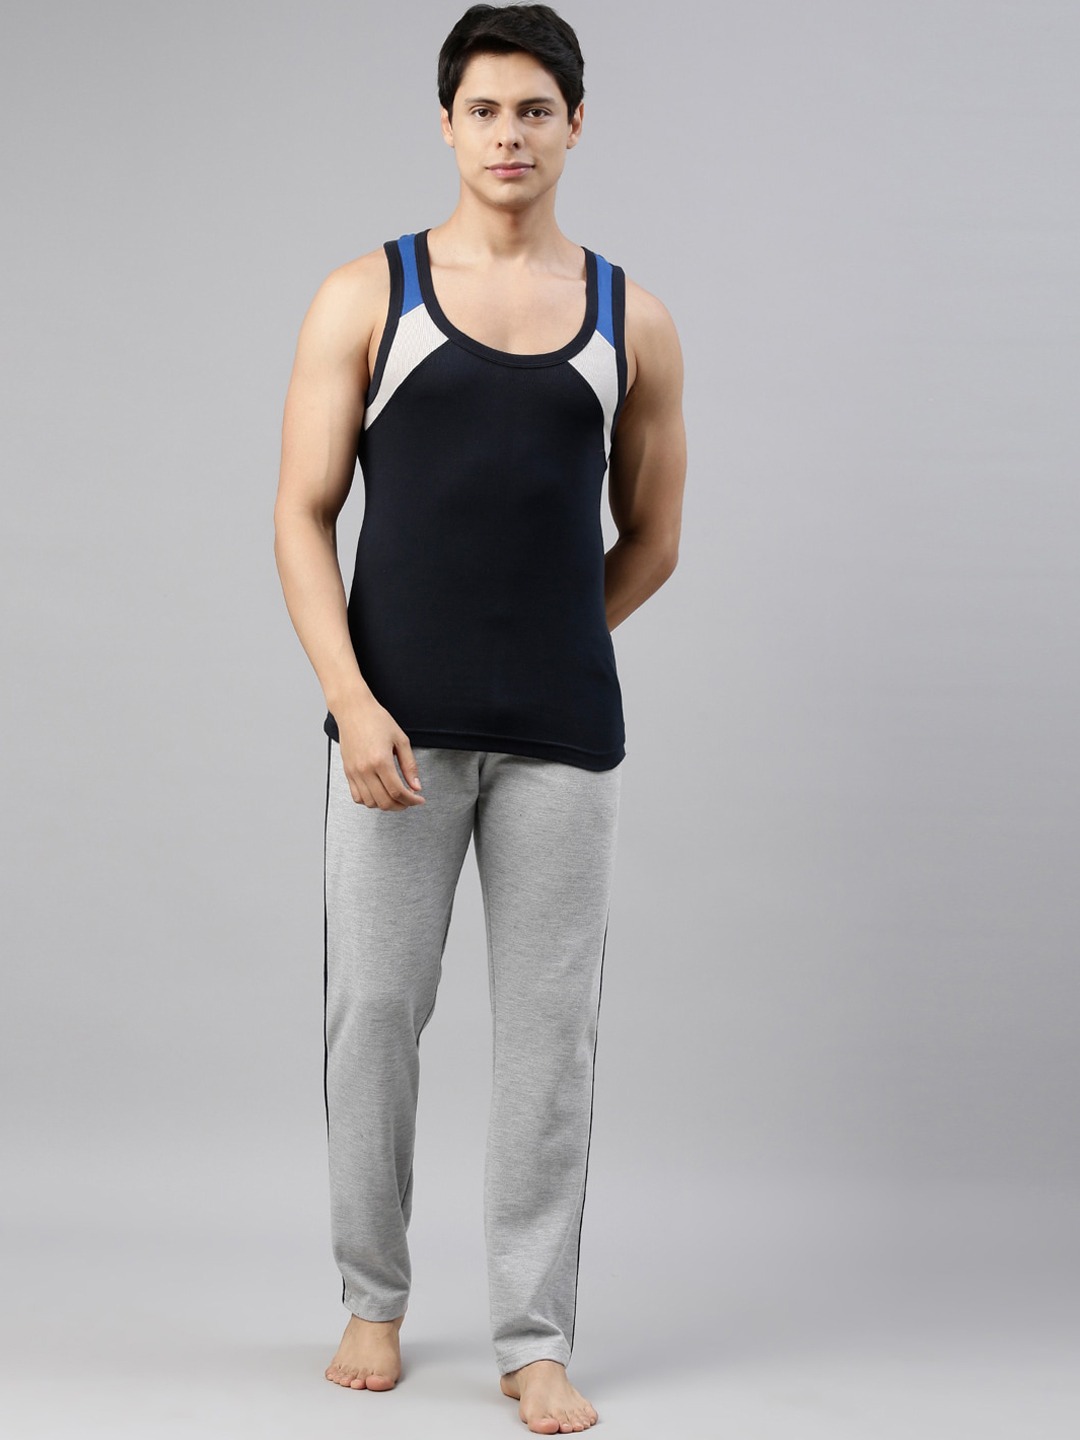 Clothing Innerwear Vests | DIXCY SCOTT Men Pack Of 2 Solid Cotton Gym Vests BOLD GYM VEST B 999 - MY13871